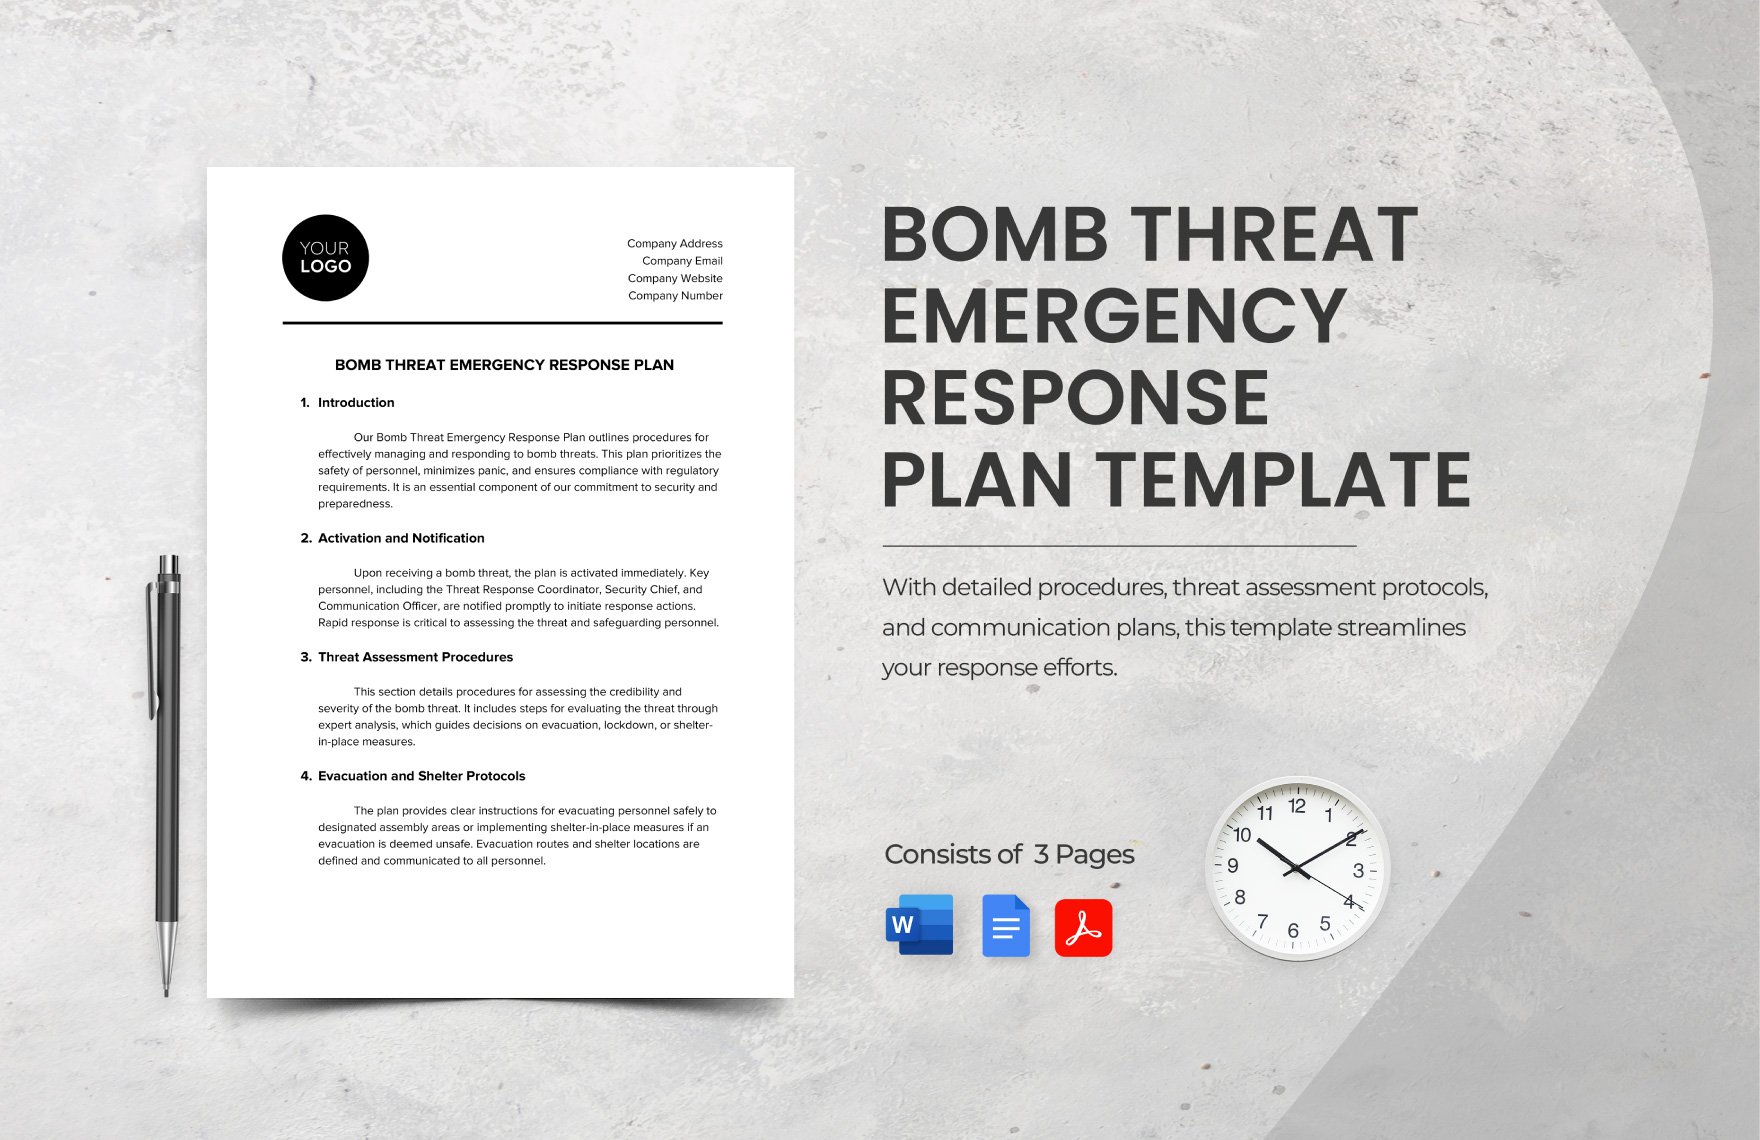 Bomb Threat Emergency Response Plan Template in Word, Google Docs, PDF